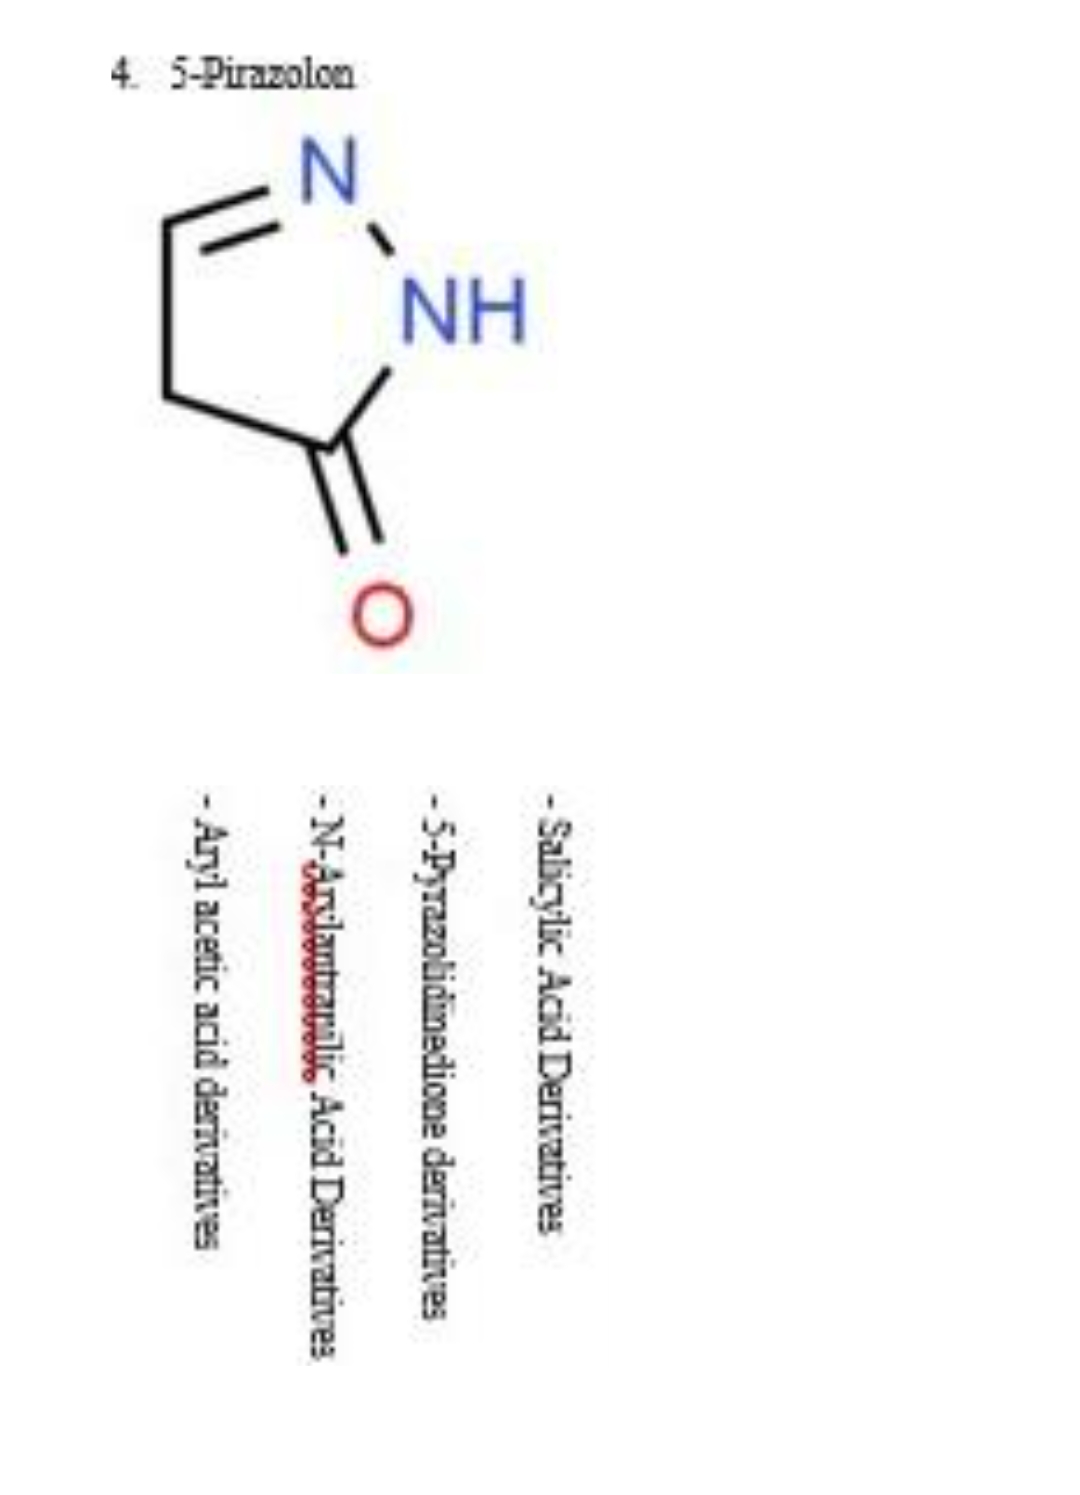 4. 5-Pirazolon
NH
- Salicylic Acid Derivatives
- 5-Pyrazolidinedione derivatives
-N-aslautravilic Acid Derivatives
- Aryl acetic acid derivatives
